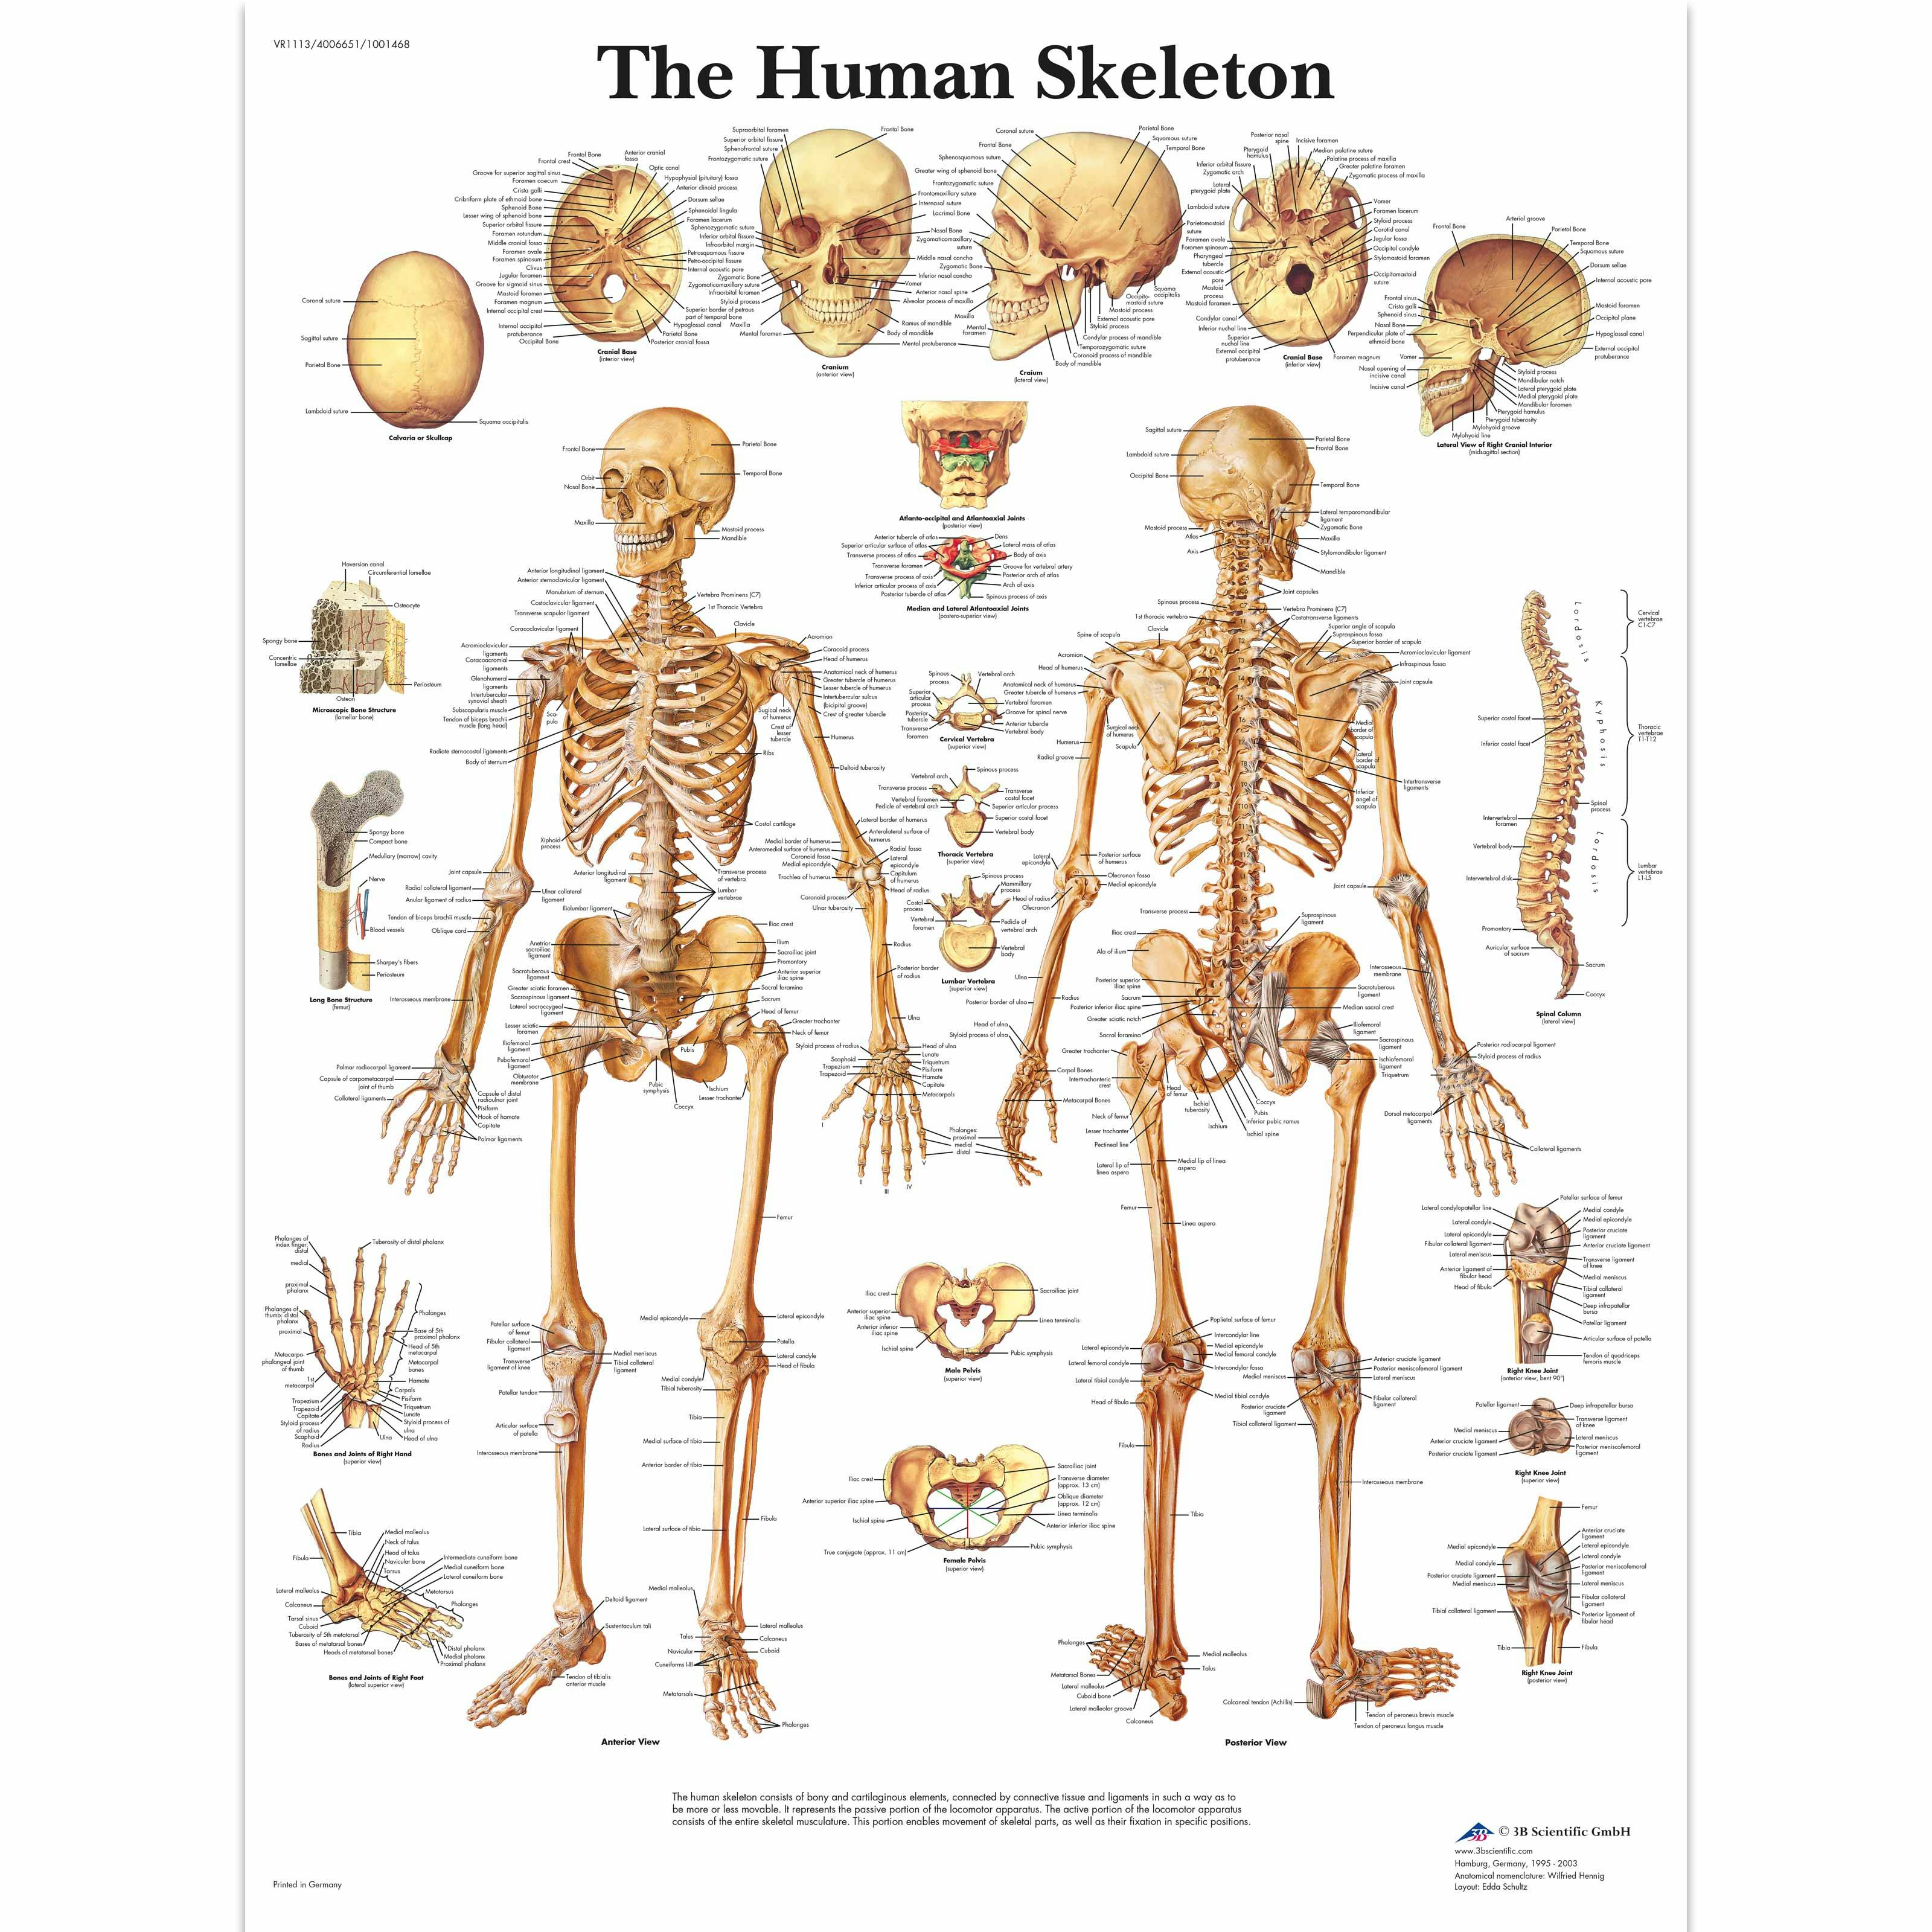 VR1113UU_01_3200_3200_The-Human-Skeleton.jpg